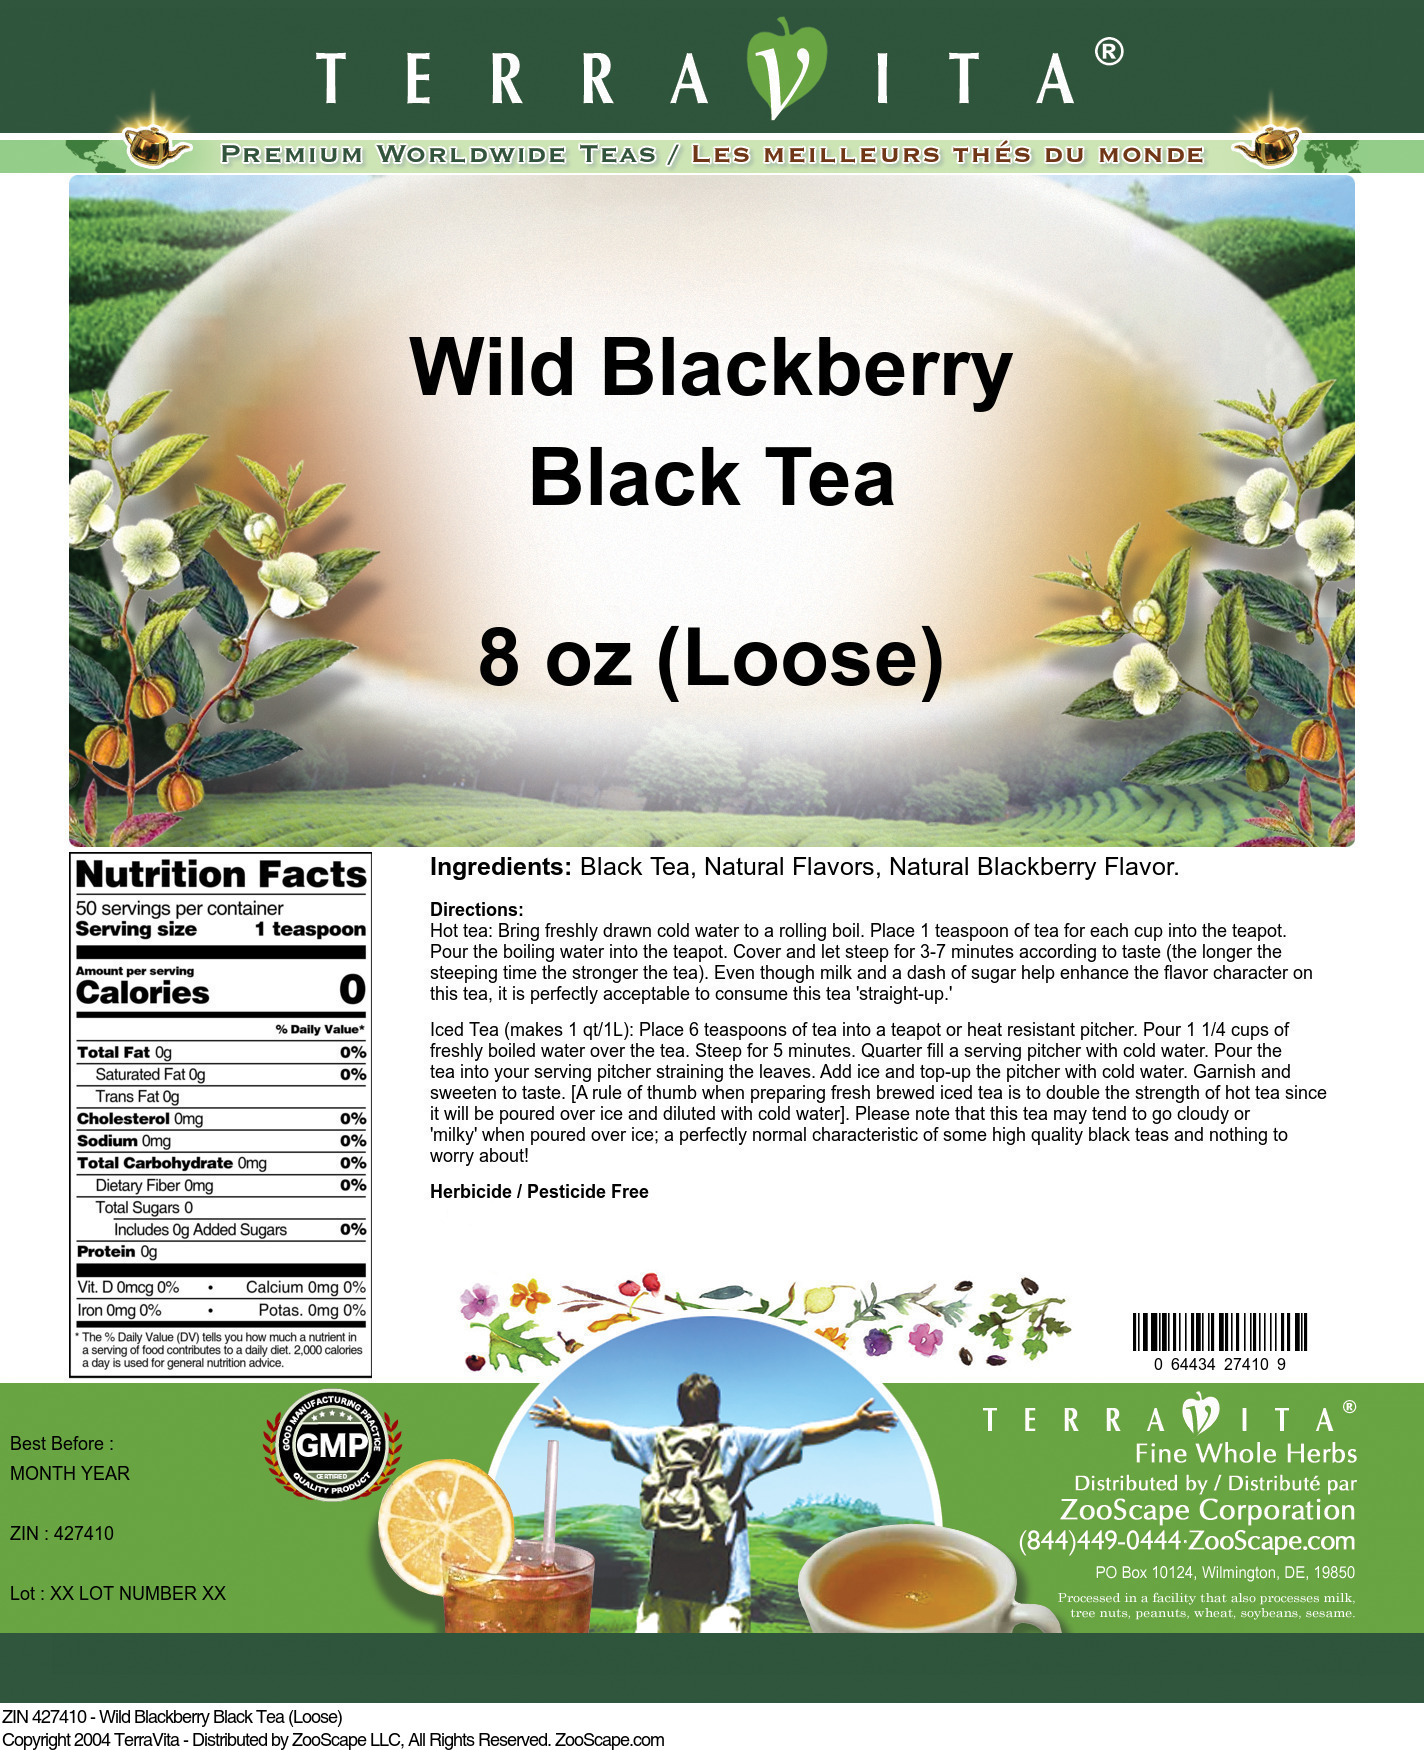 Wild Blackberry Black Tea (Loose) - Label